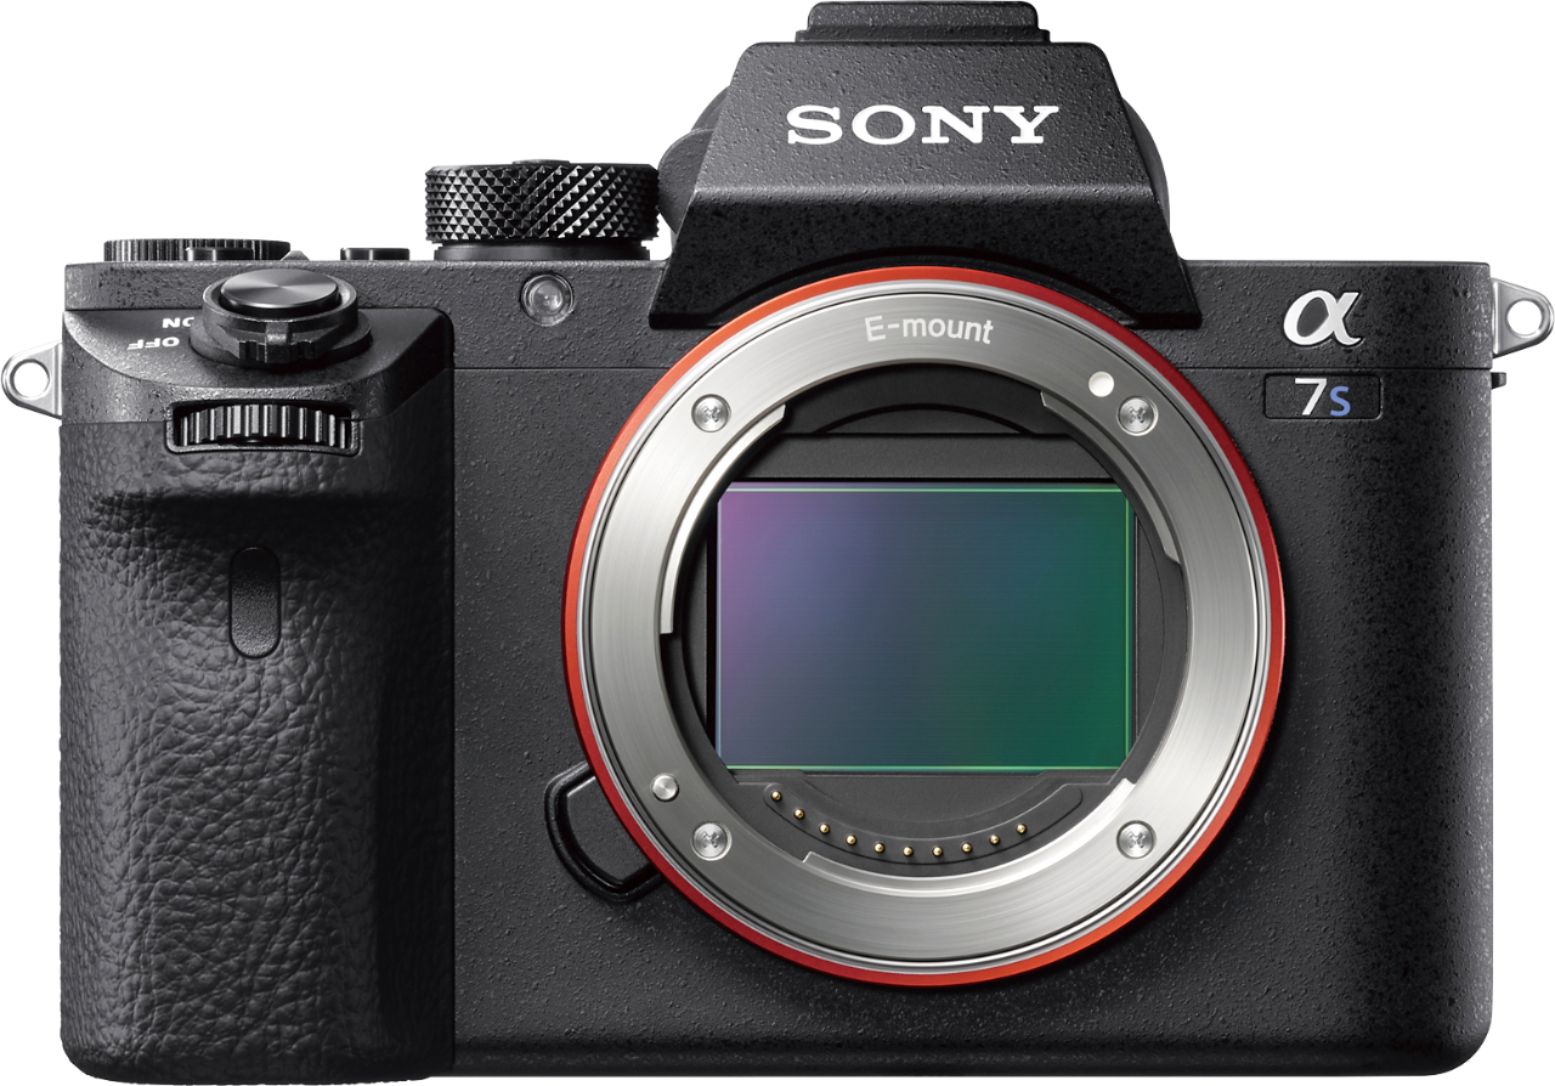 Sony - Alpha a7S II Full-Frame Mirrorless Camera (Body Only) - Black